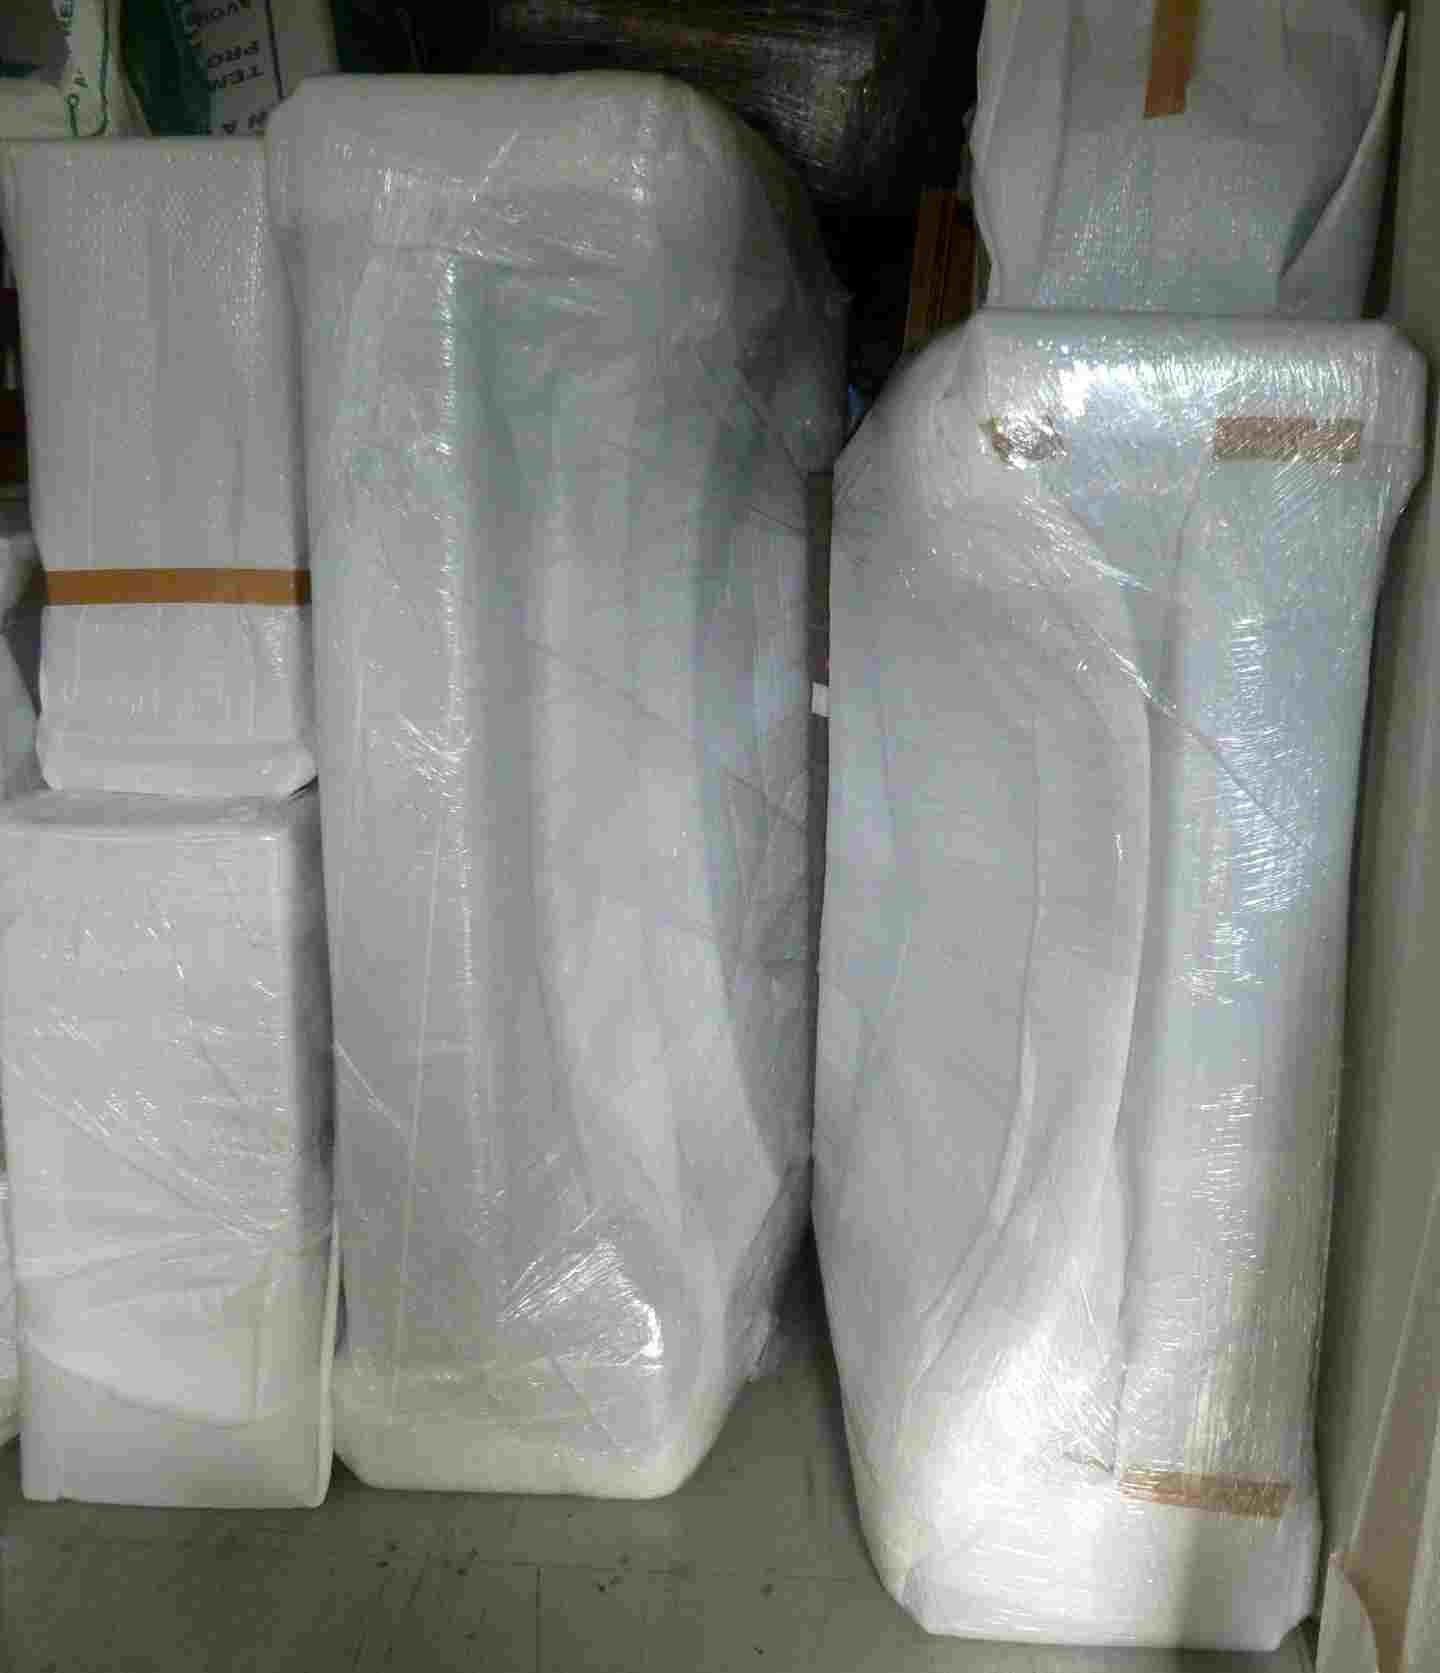 Sevenoaks Furniture (Export) wrapping